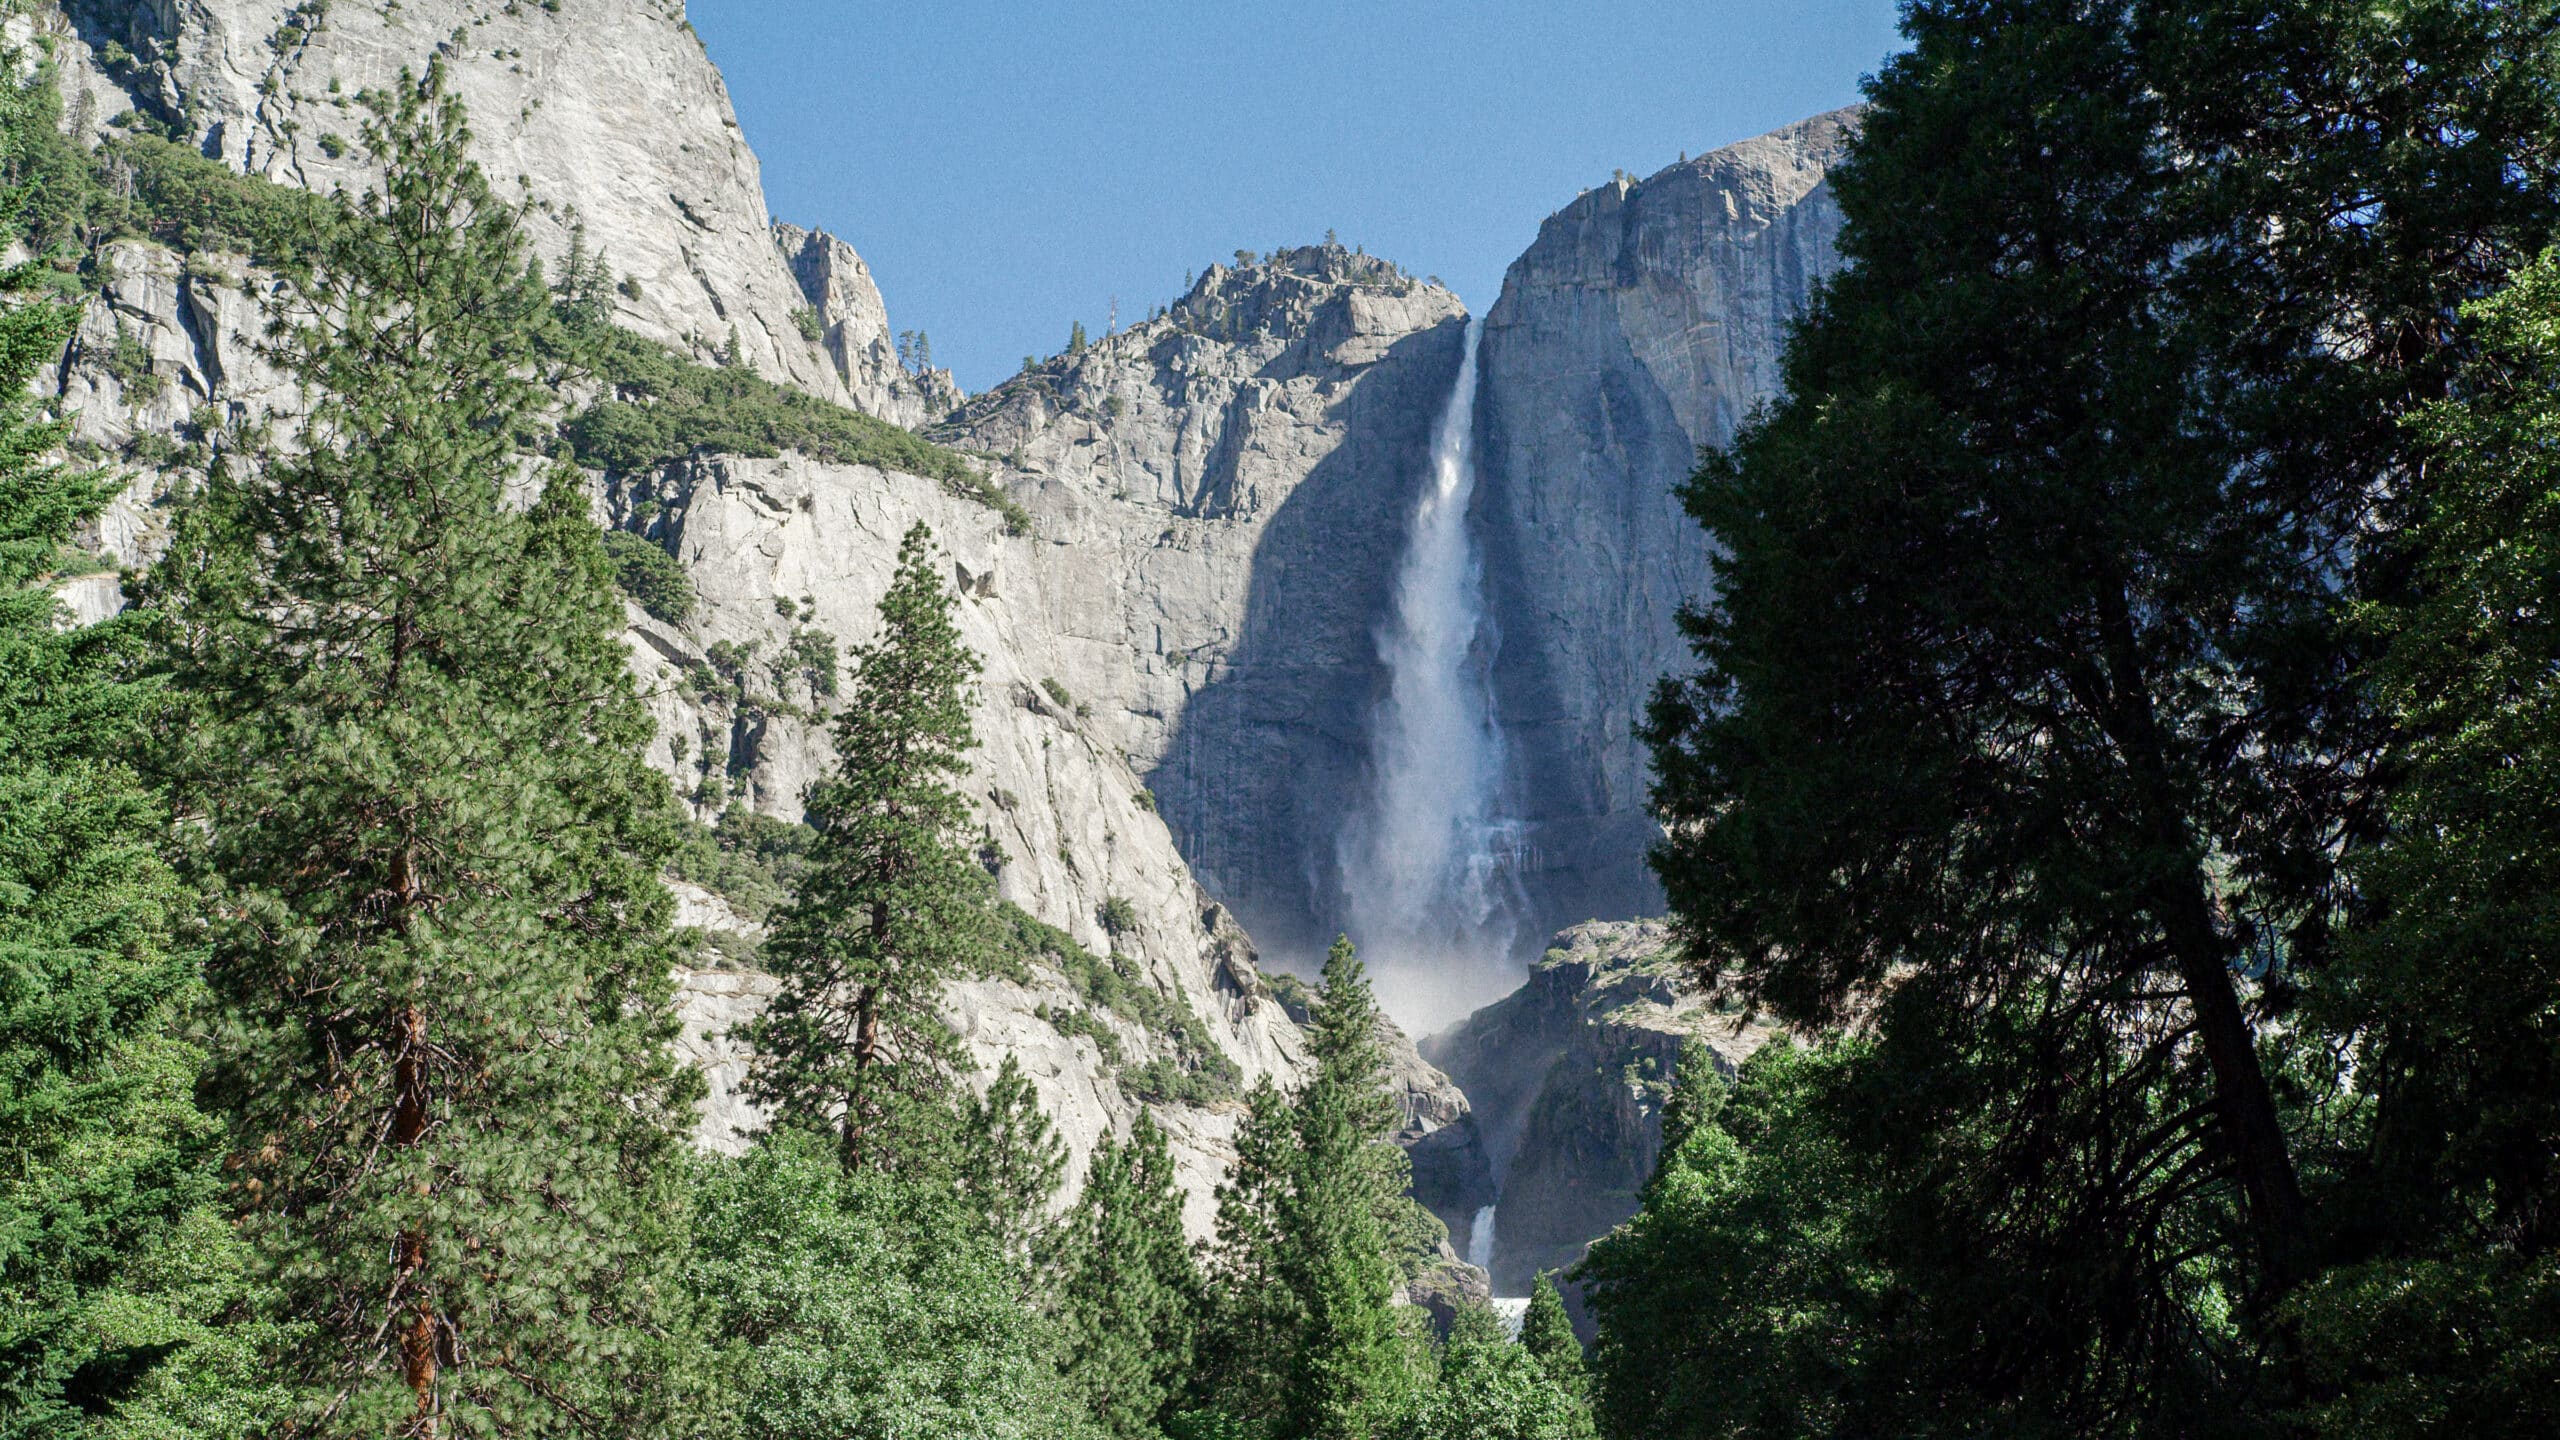 Yosemite falls near San Francisco